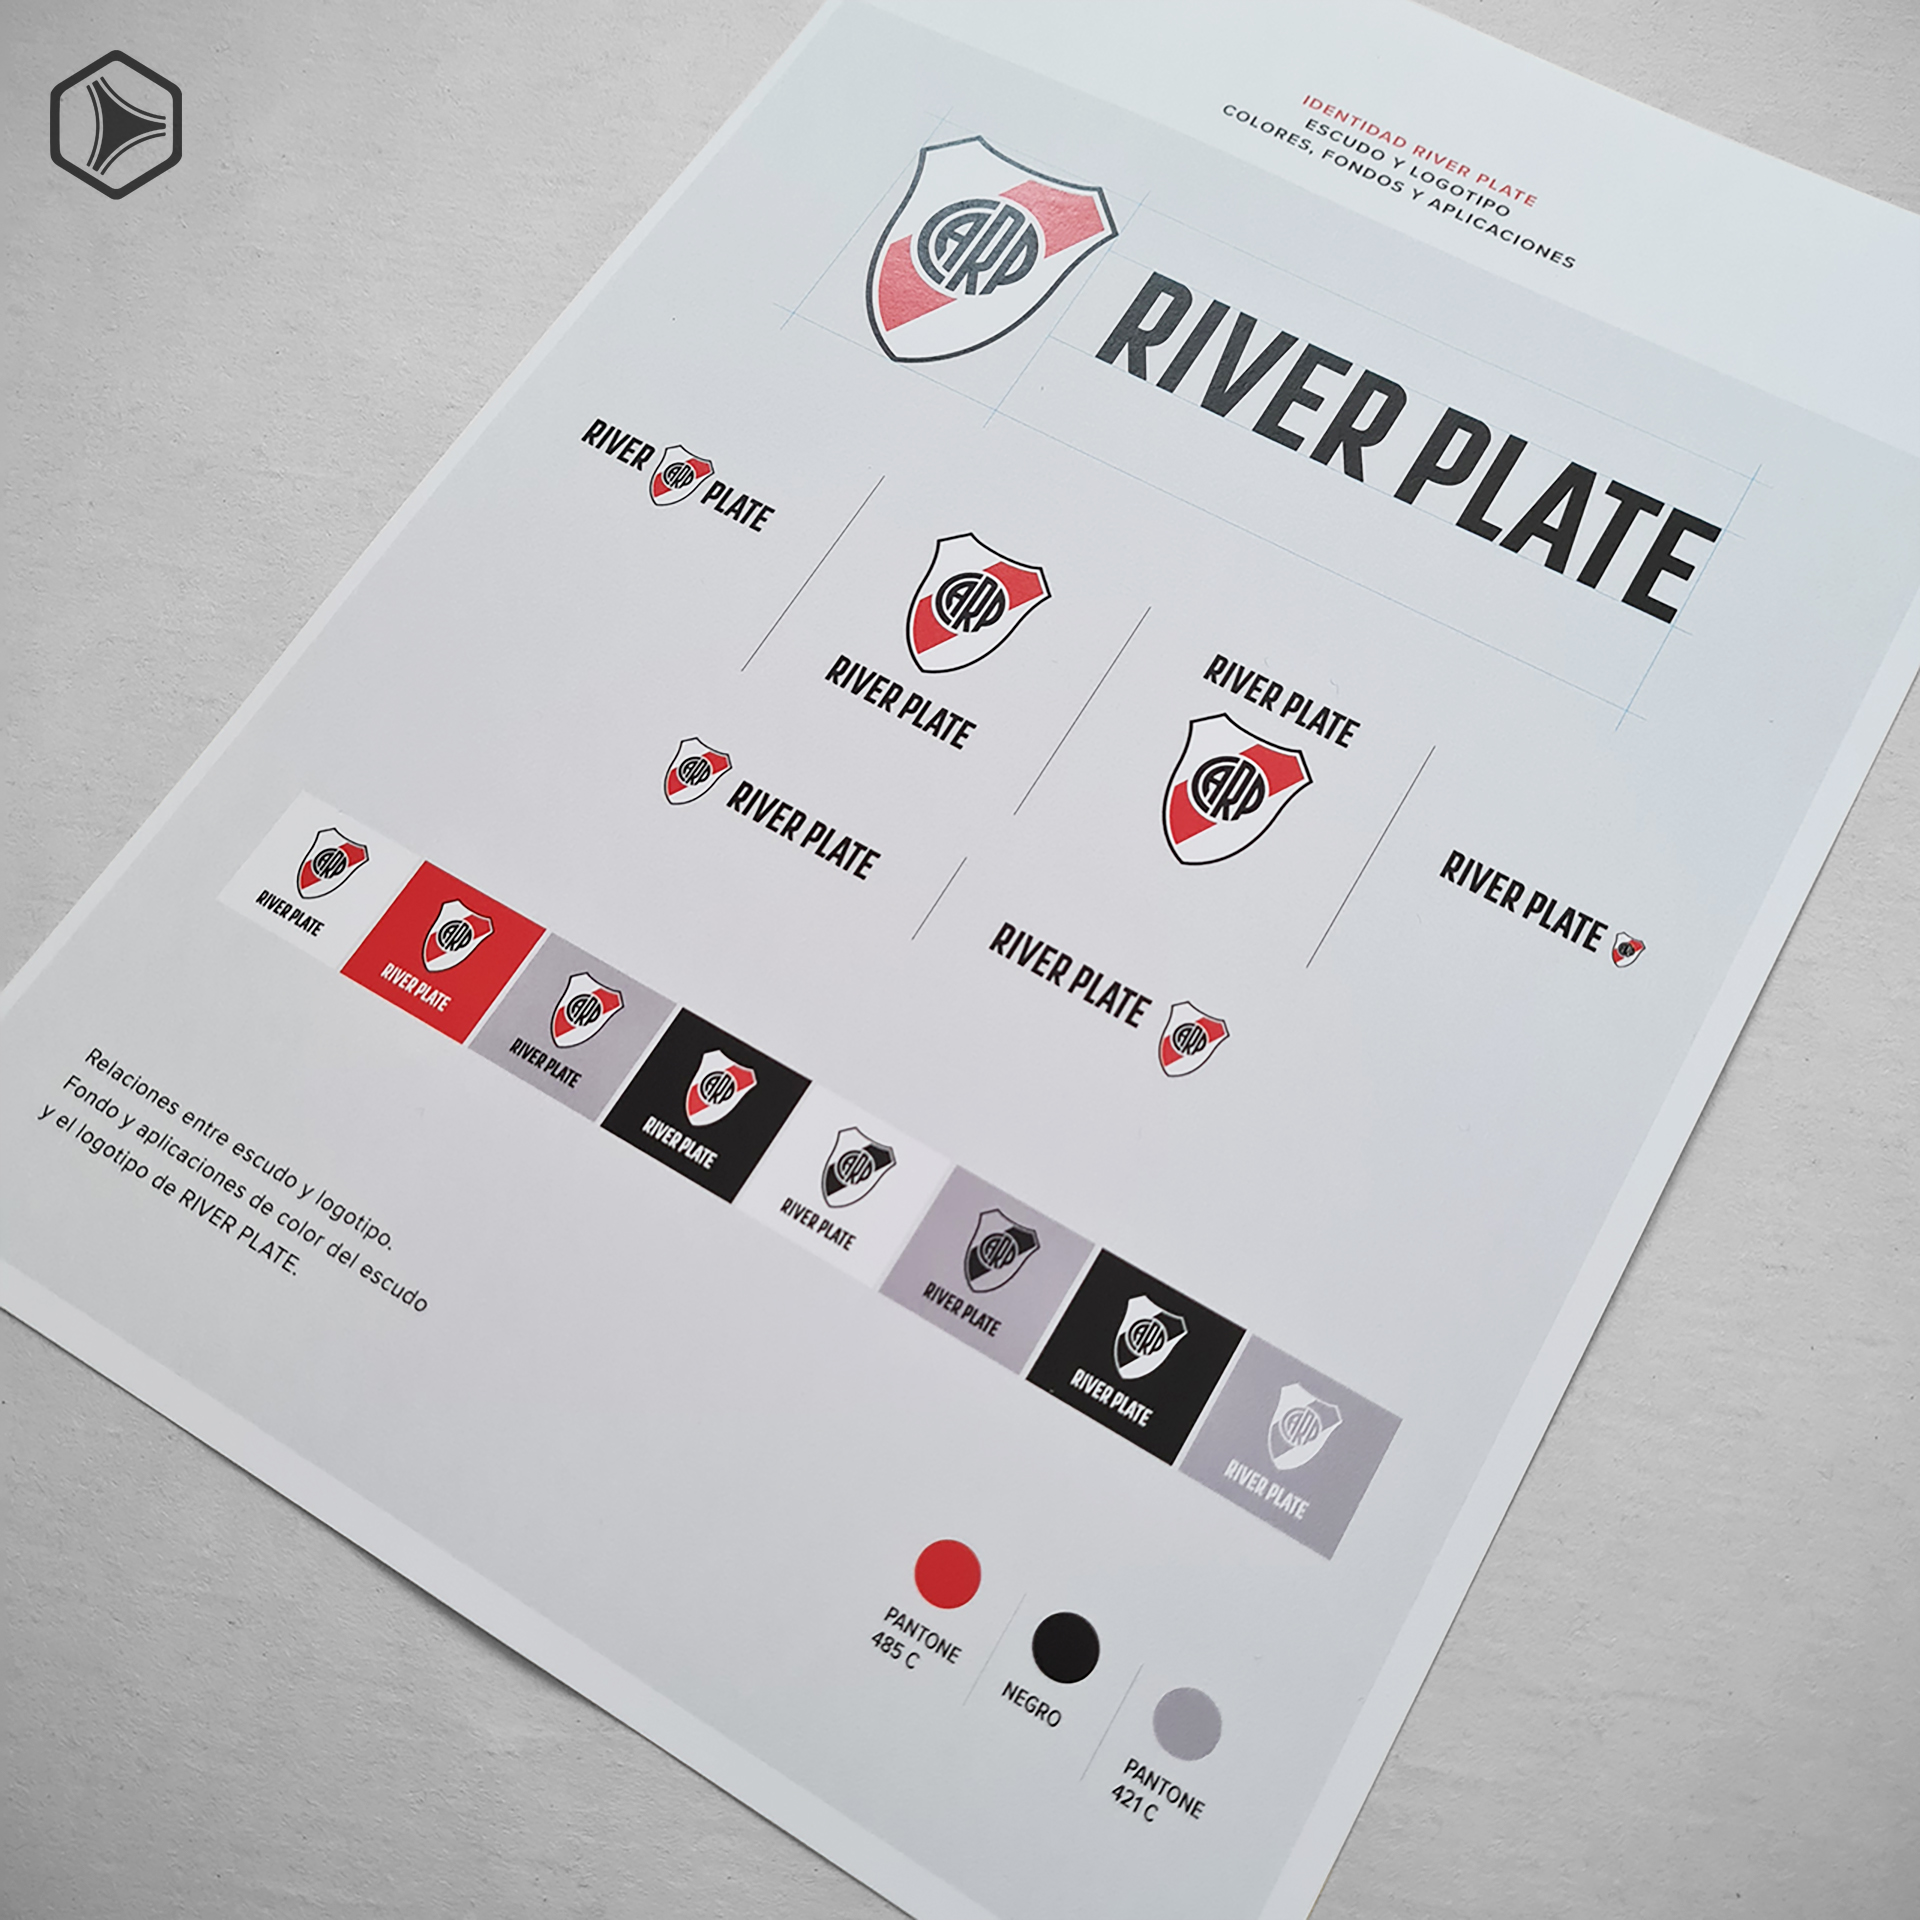 Nuevo escudo de River Plate Aplicaciones